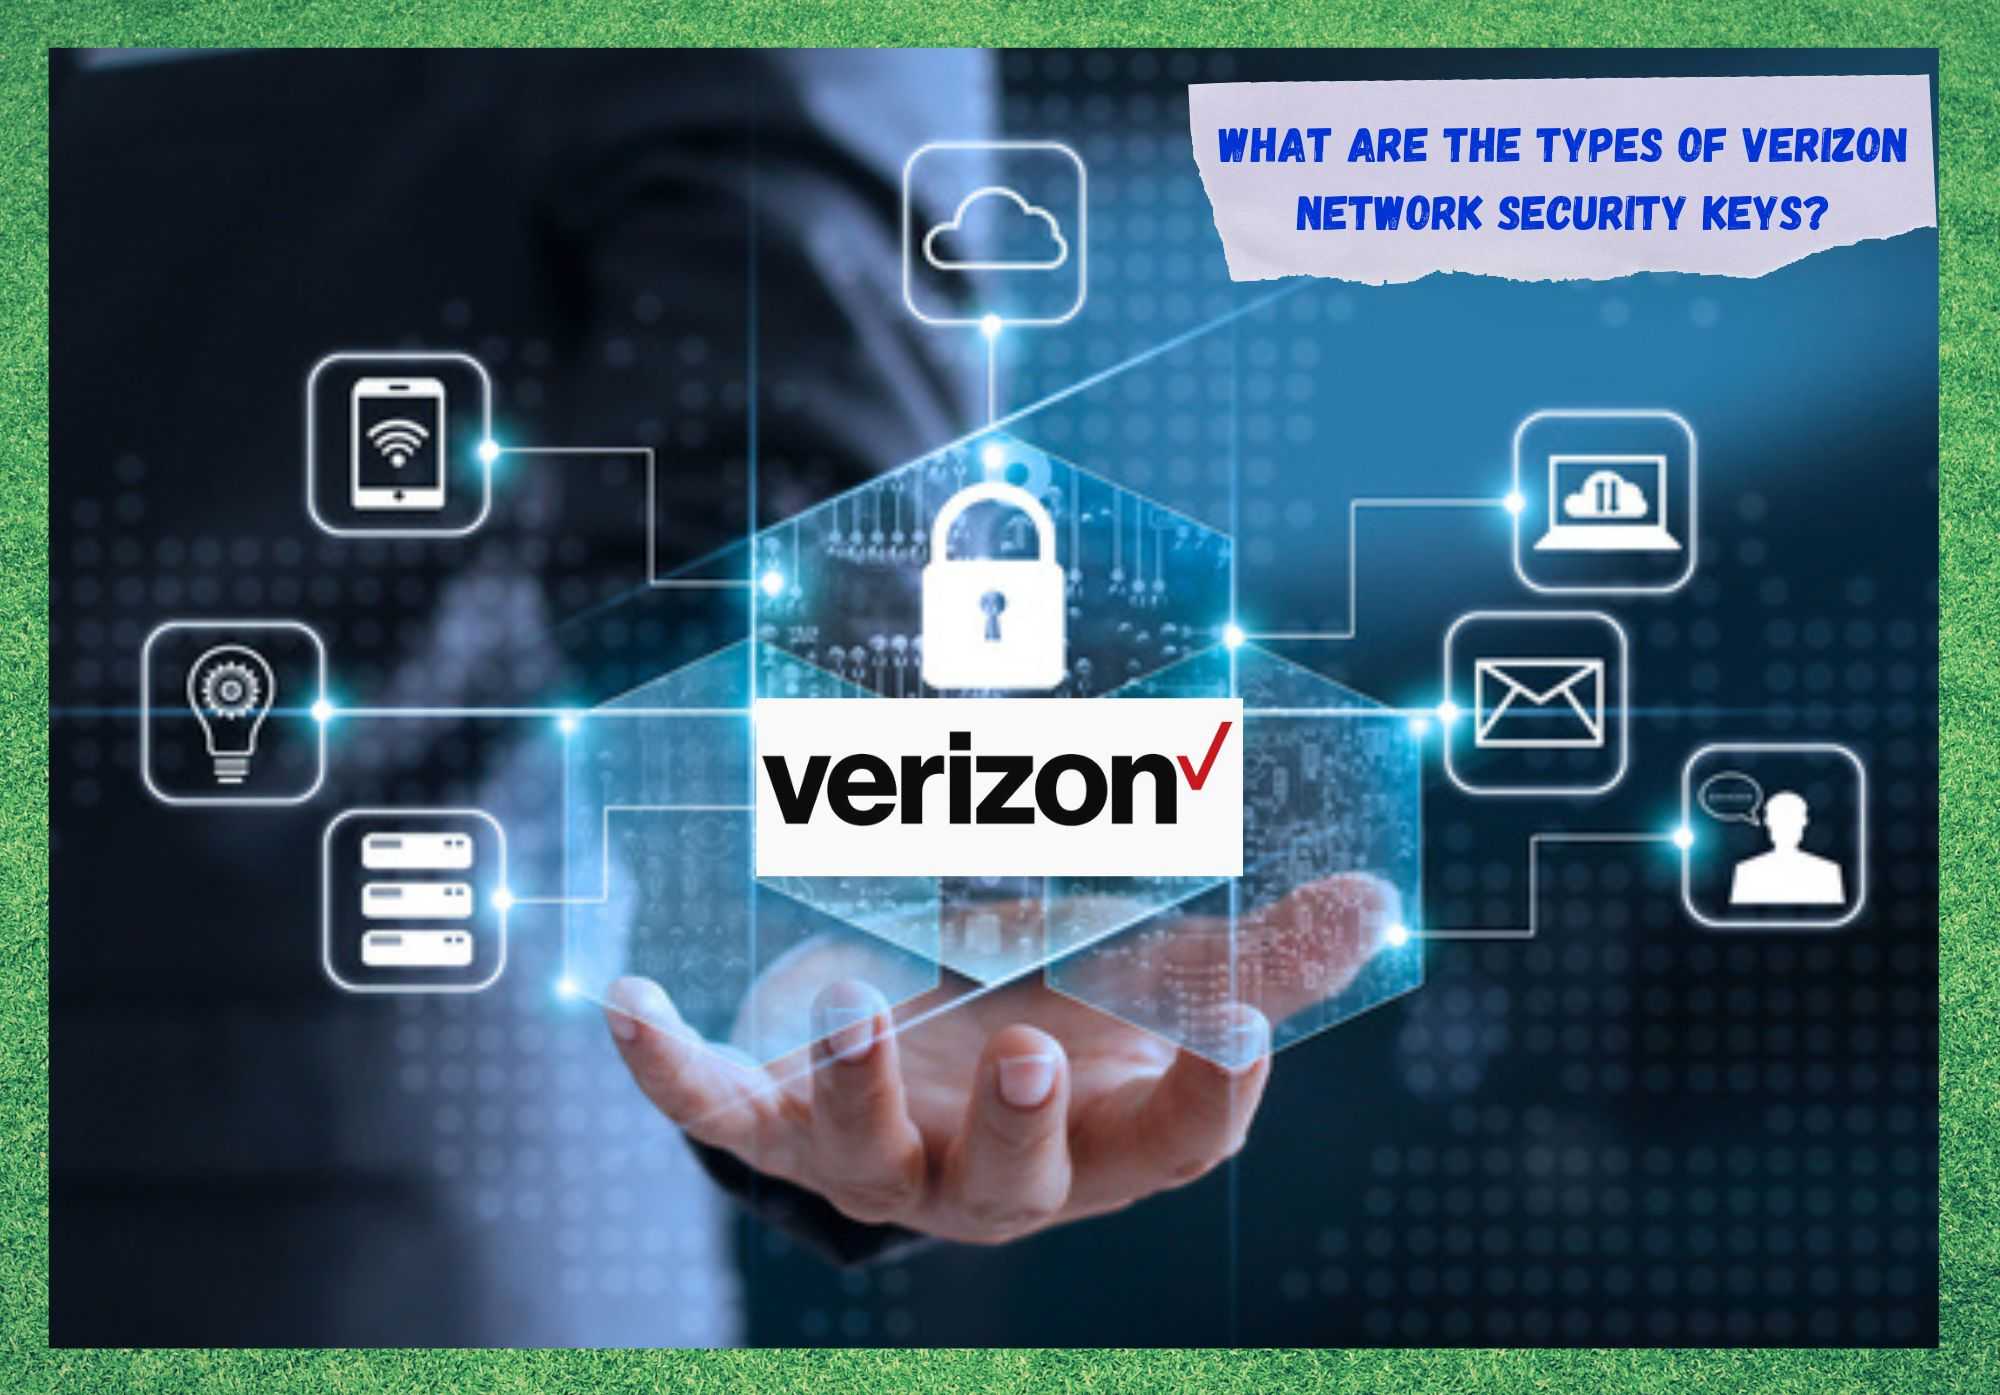 verizon network security key